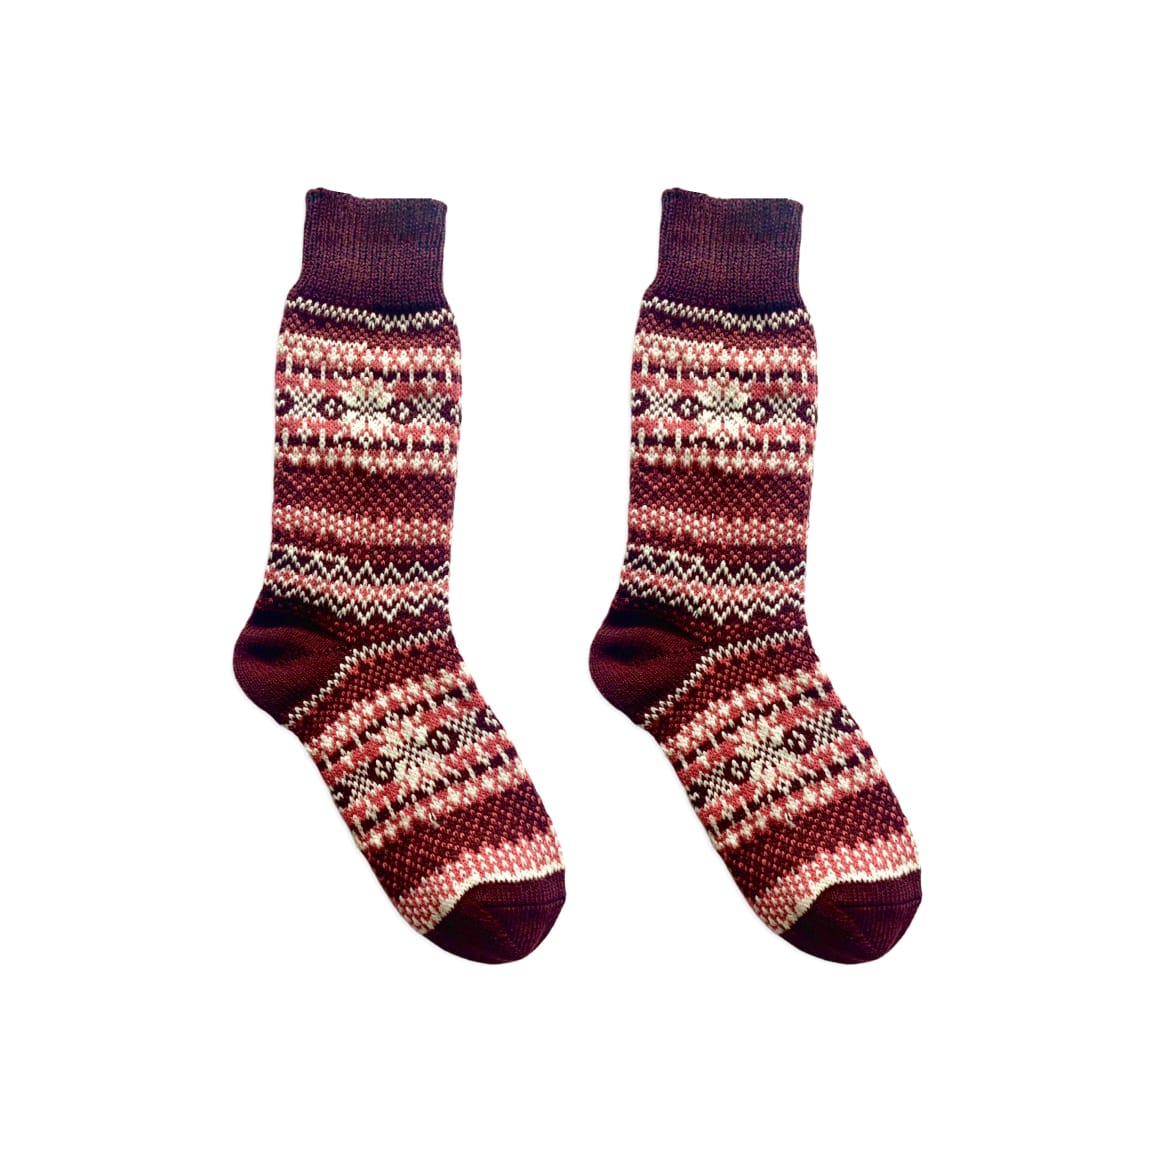 Nordic Socks Soft COZY™  Warm (Rosa - Plum)  - Unisex